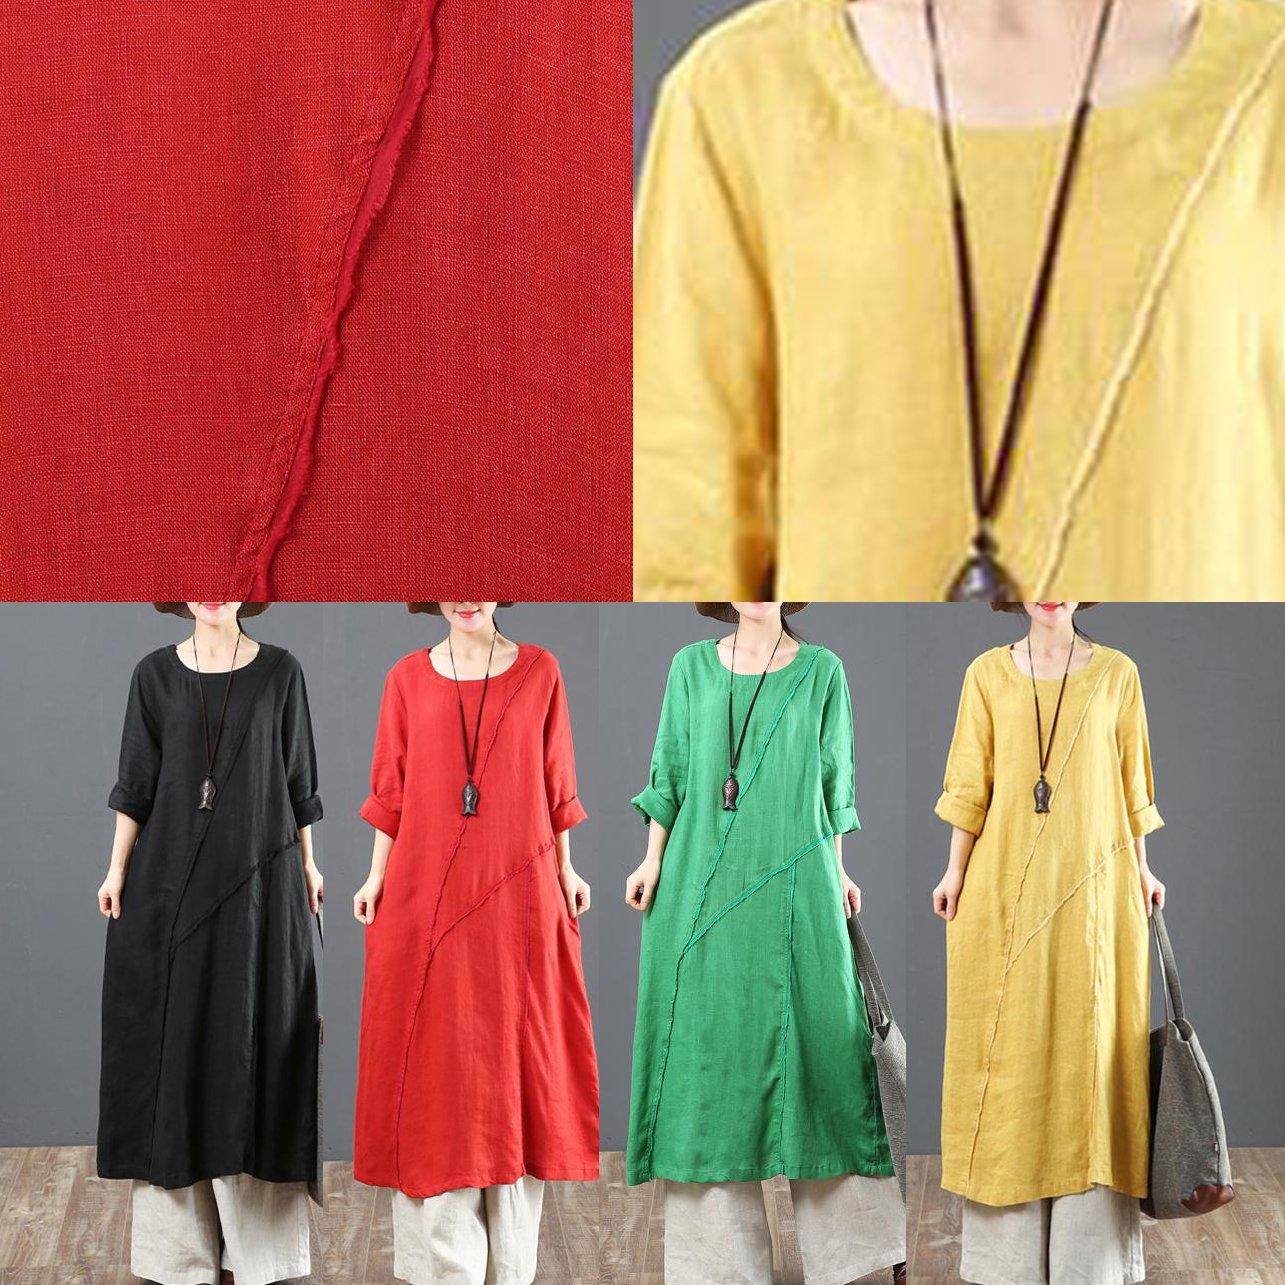 Italian linen dresses Fitted Casual Long Sleeve yellow Spliced Women Dress - Omychic